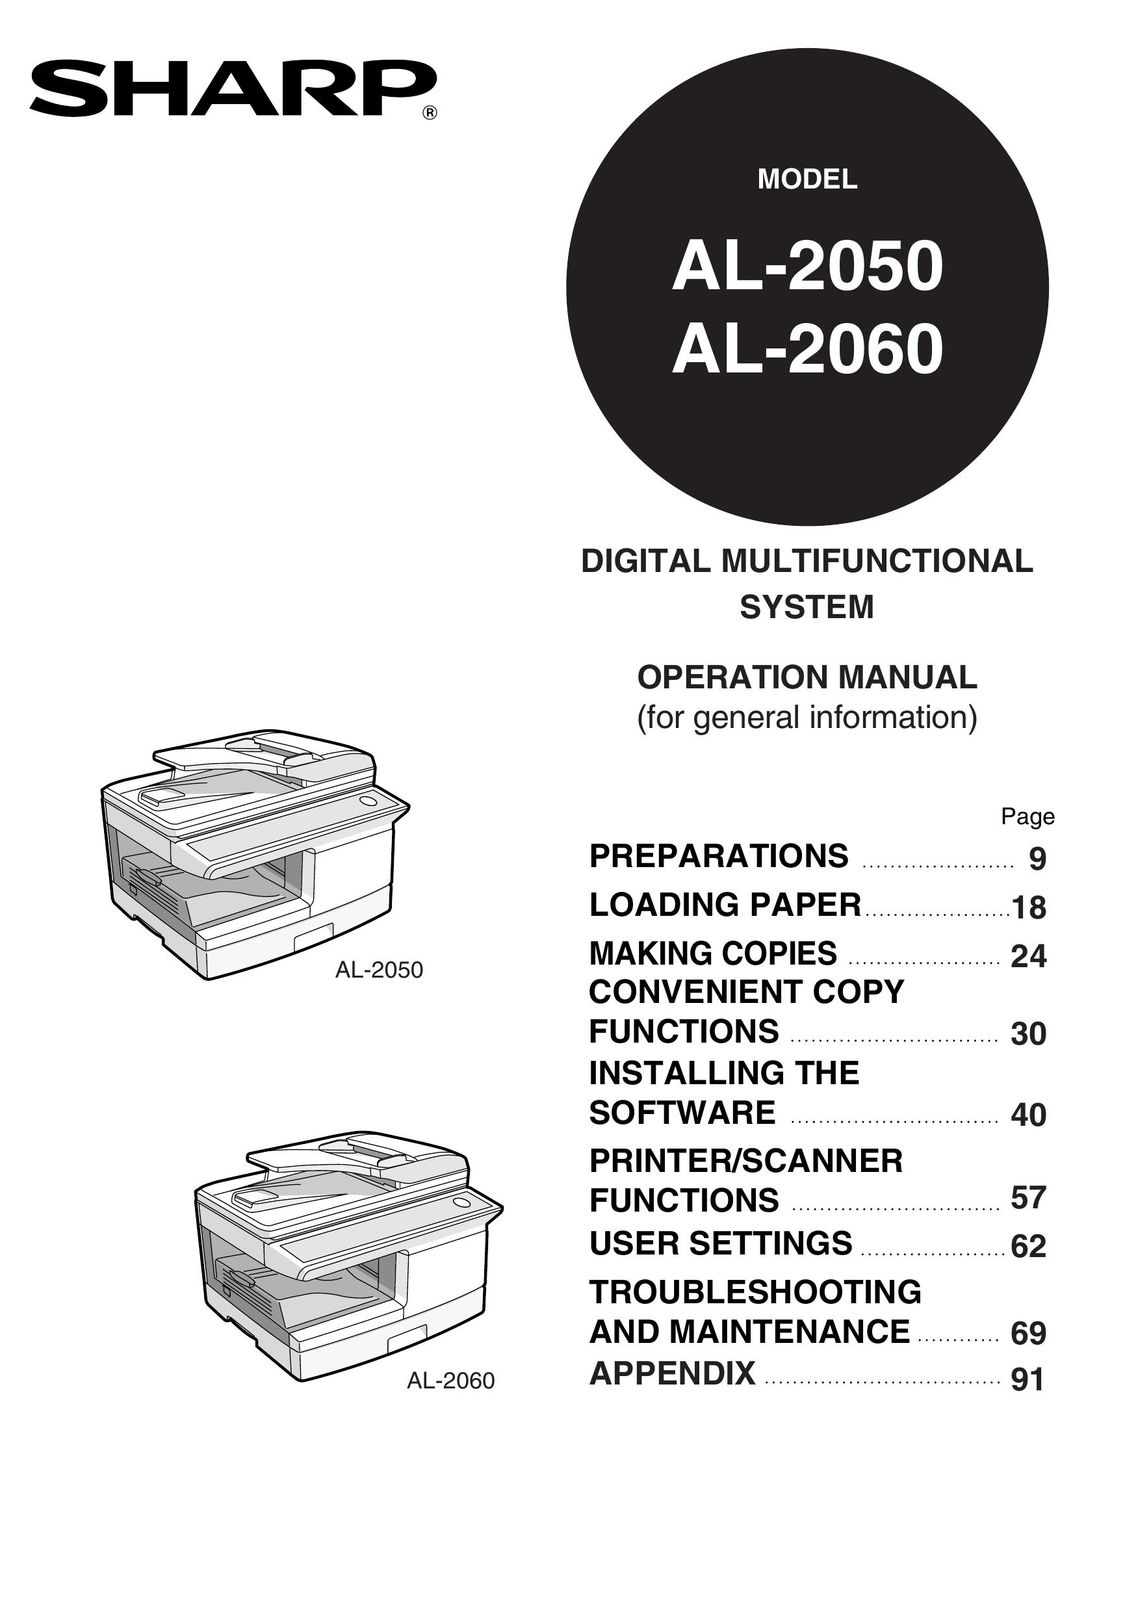 Sharp AL-2050 All in One Printer User Manual